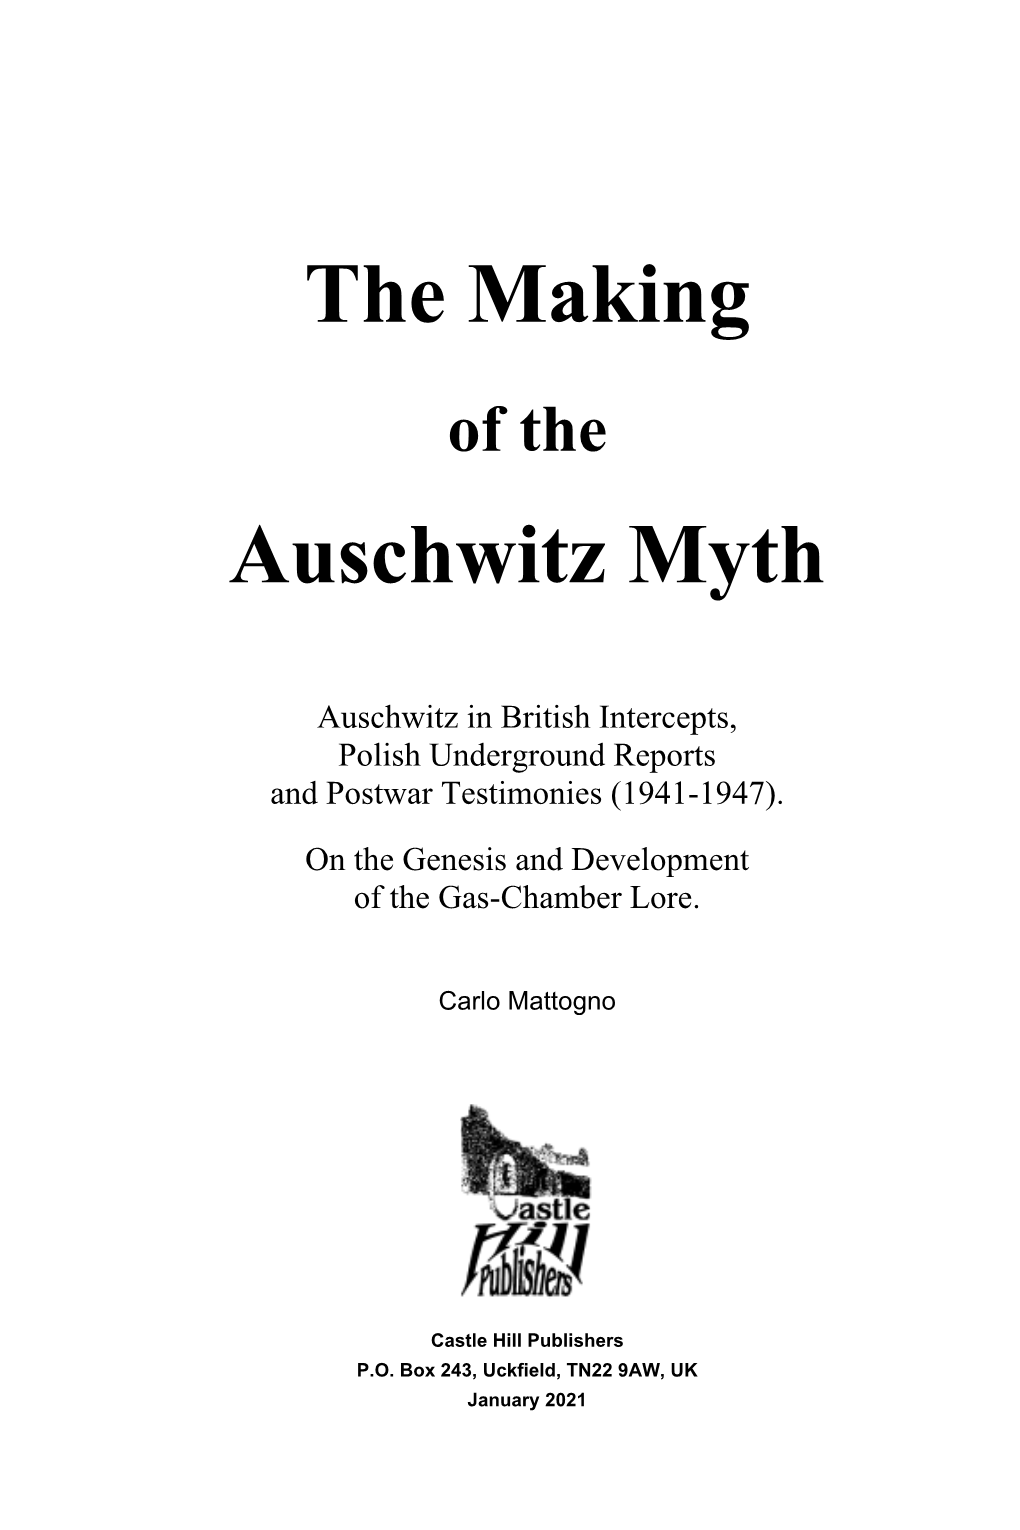 The Making of the Auschwitz Myth